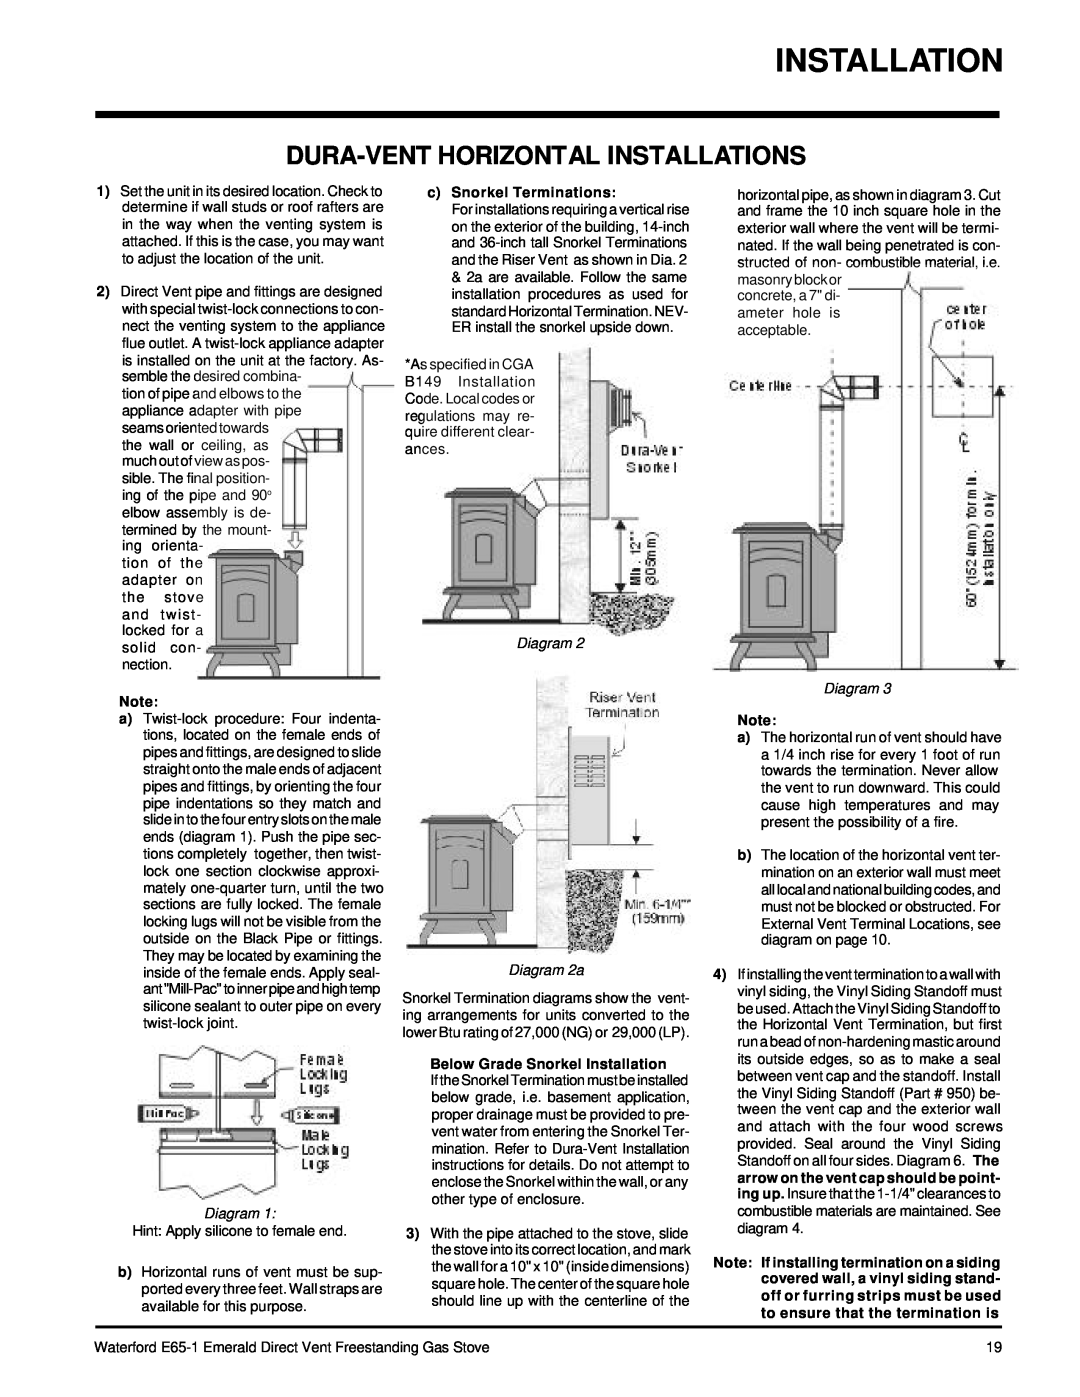 Waterford Appliances E65-LP1, E65-NG1 Dura-Venthorizontal Installations, cSnorkel Terminations, Diagram Diagram 2a 